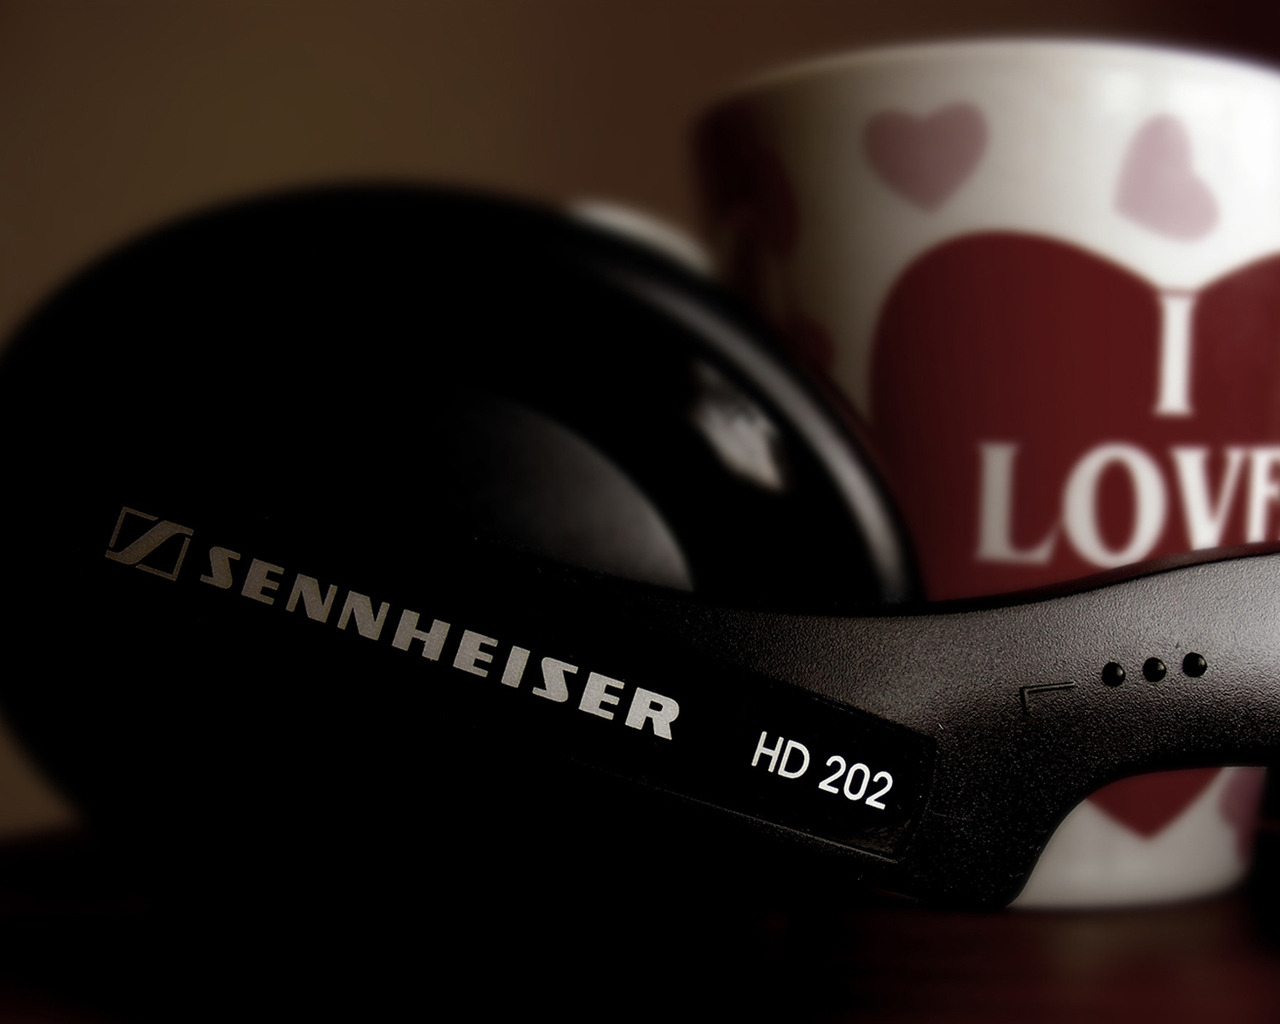 Sennheiser HD 202 for 1280 x 1024 resolution